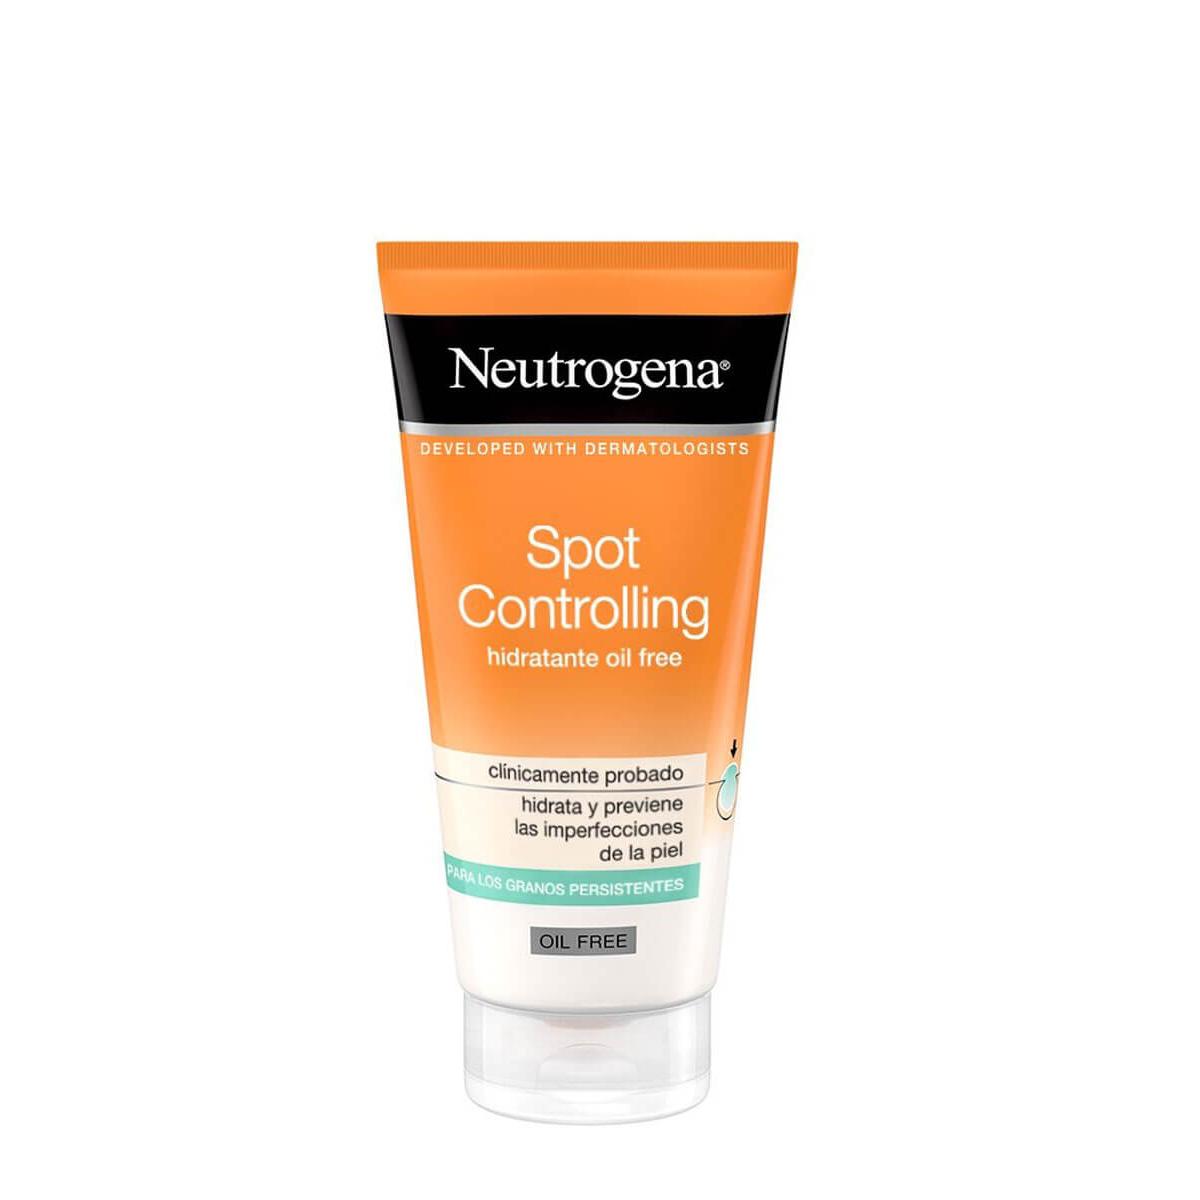 Neutrogena - Neutrogena spot controlling hidratante oil free 50ml